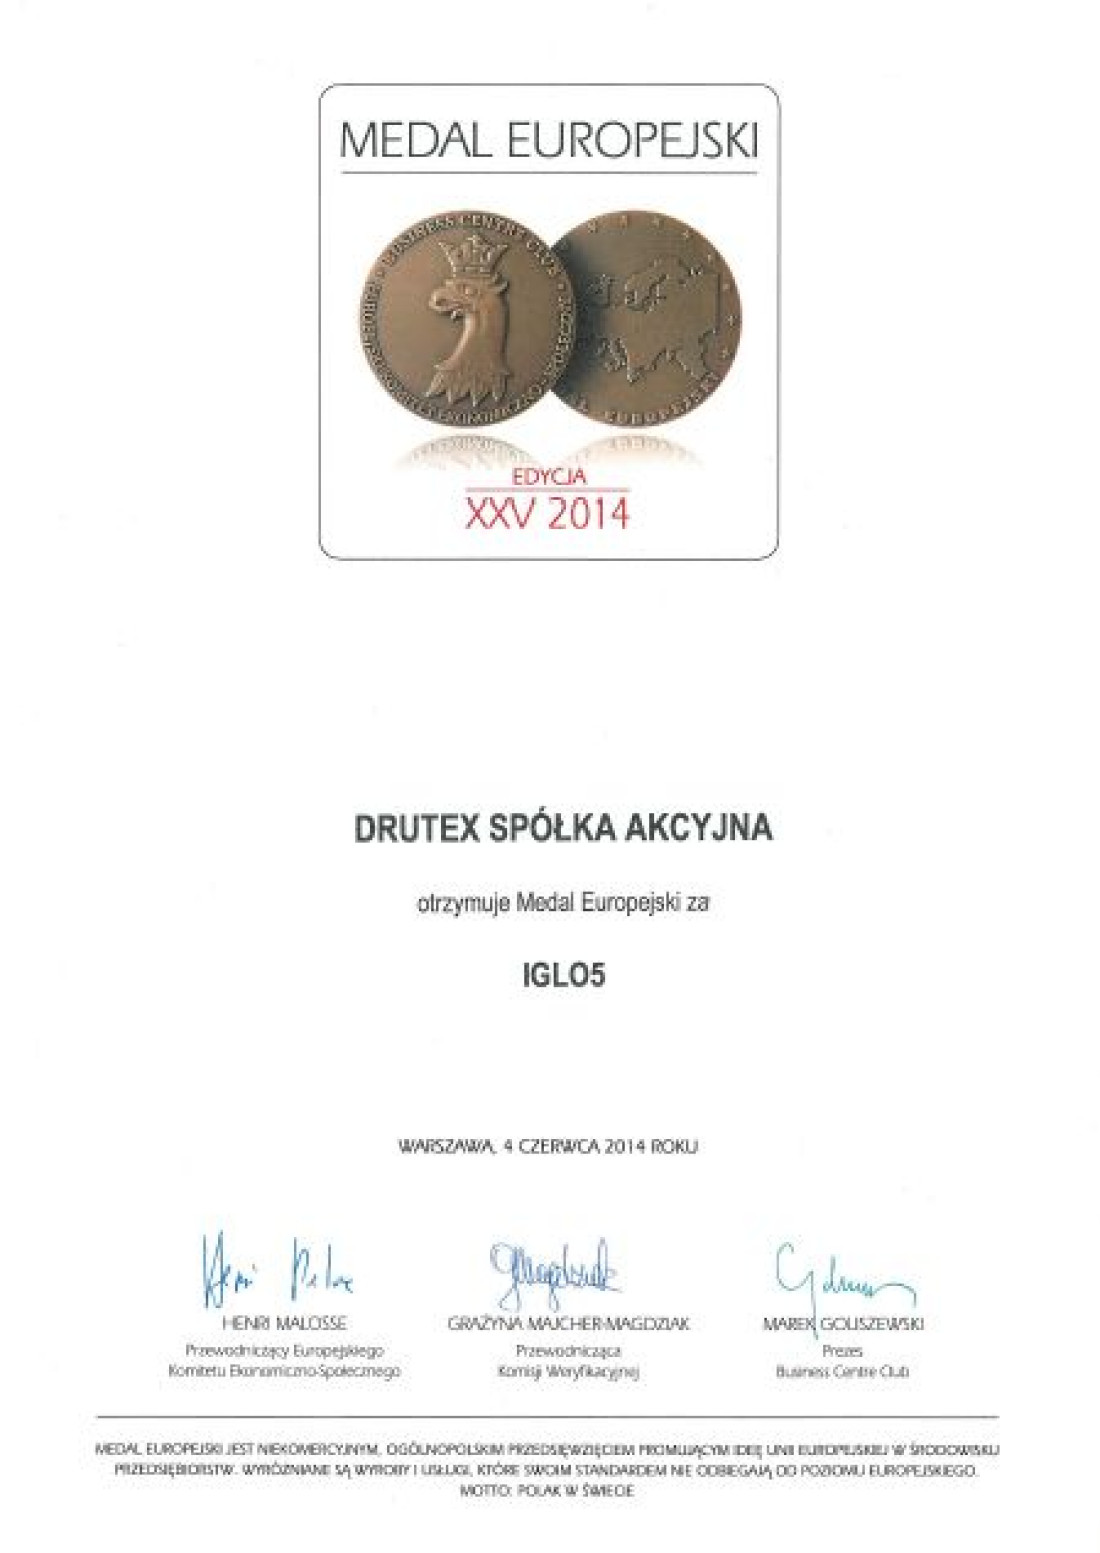 Medal Europejski 2014 dla DRUTEX-u!